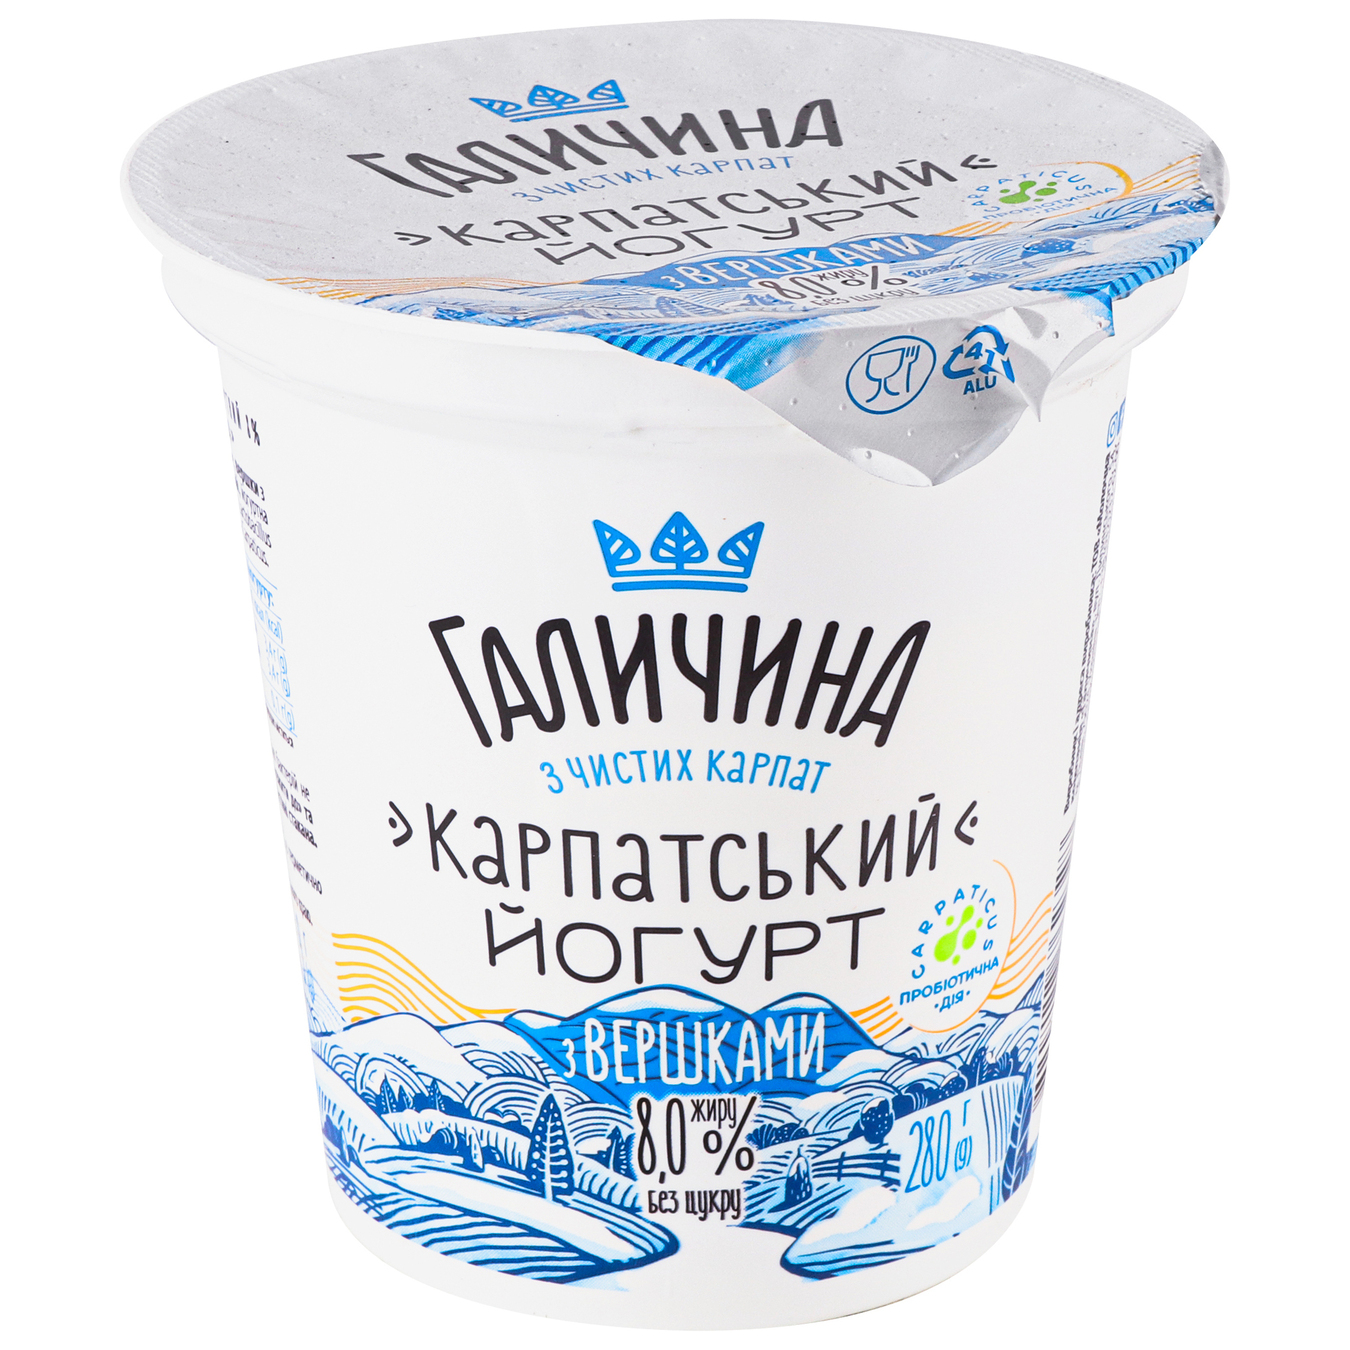 Halychyna dessert yogurt with cream glass 8% 280g 3